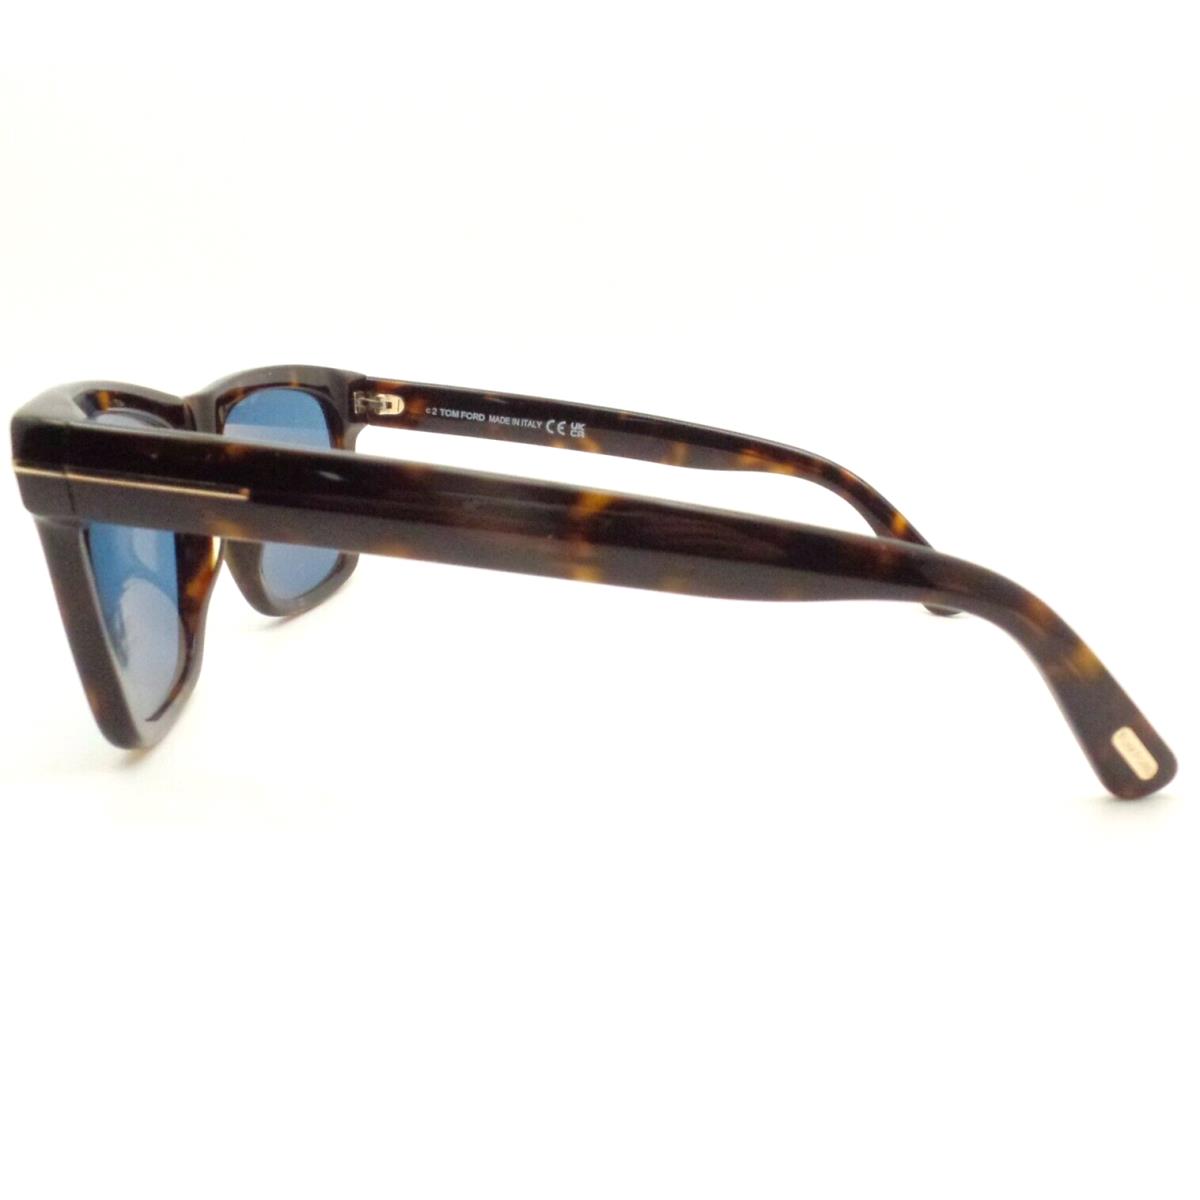 Tom Ford sunglasses  - Shiny Classic Dark Havana Frame, Blue Lens 1